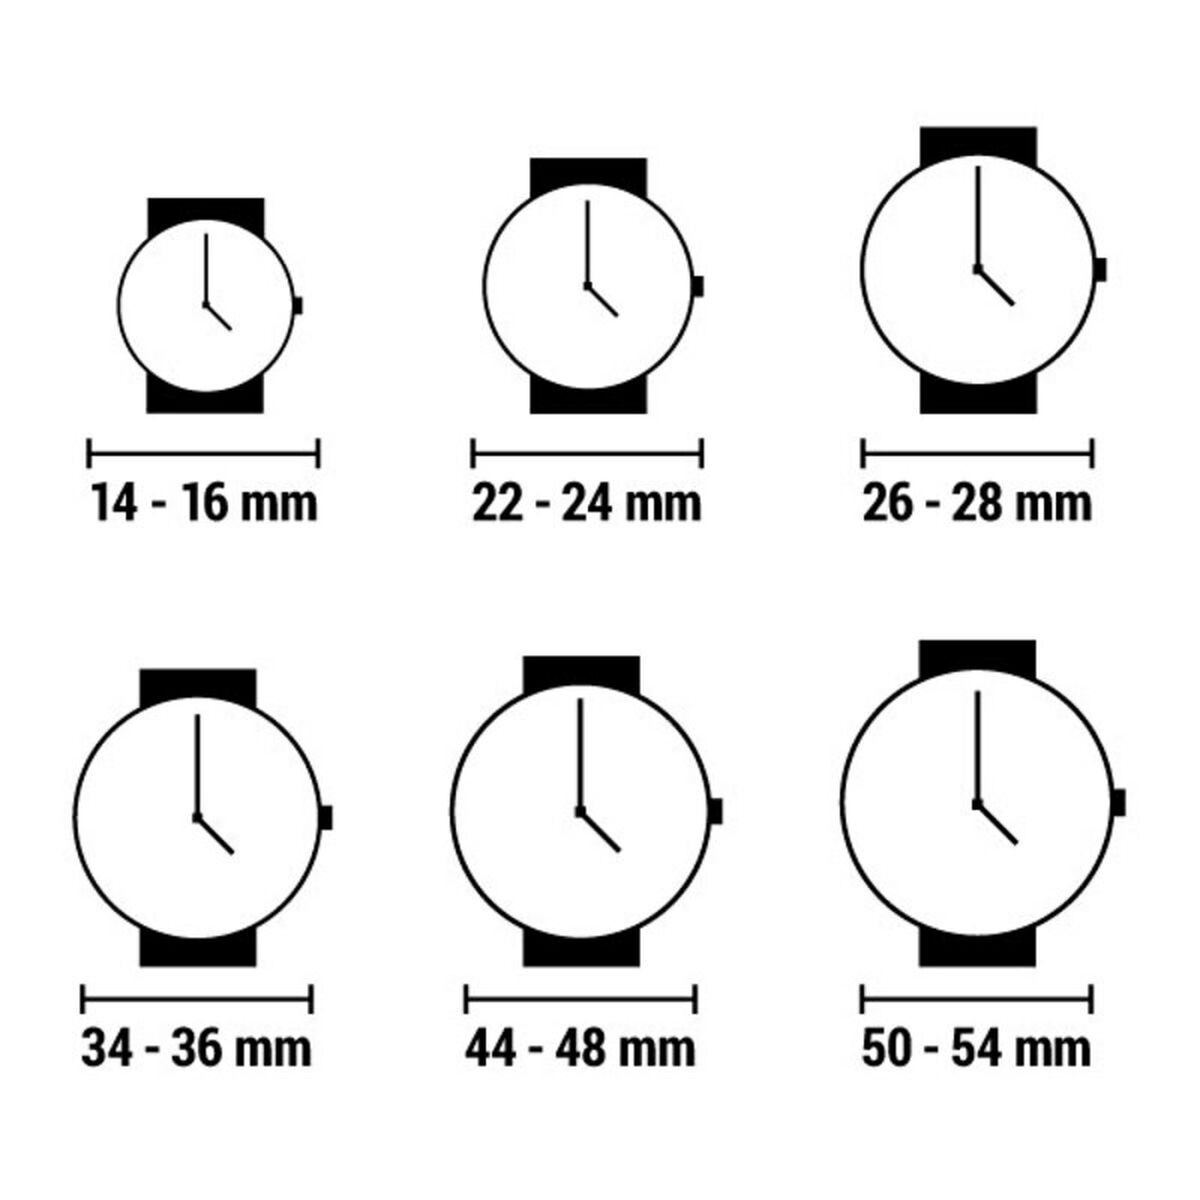 Horloge Heren Guess W0921G1 (Ø 39 mm)